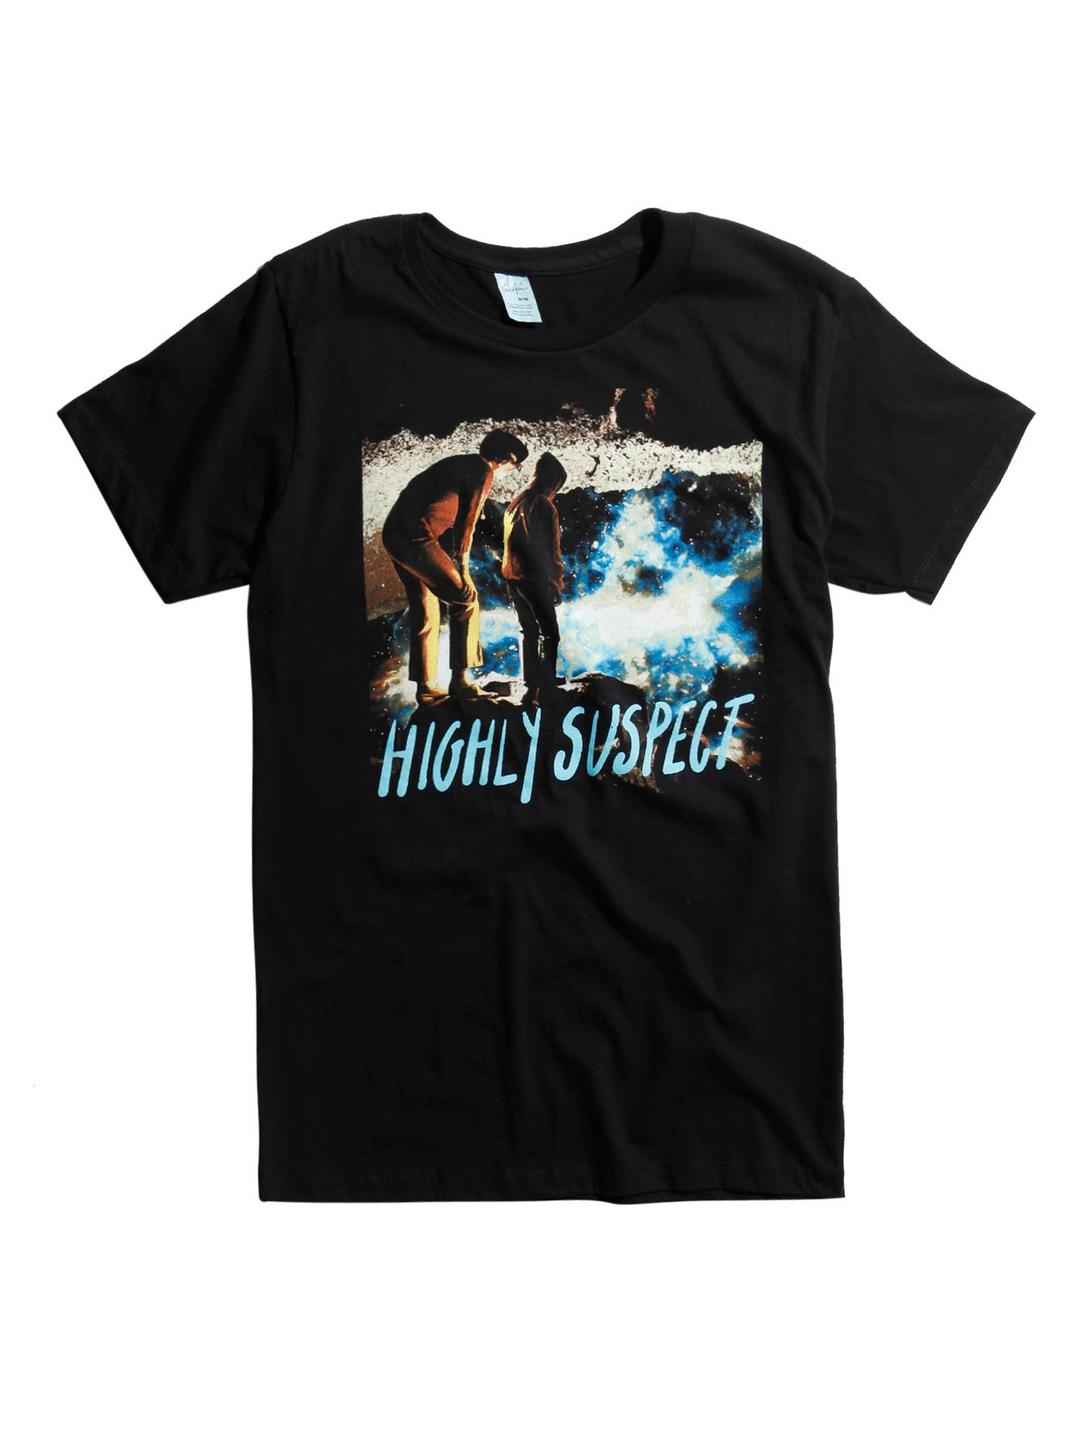 Highly Suspect Men T-Shirt Unique Outdoor Summer Tee Shirt 